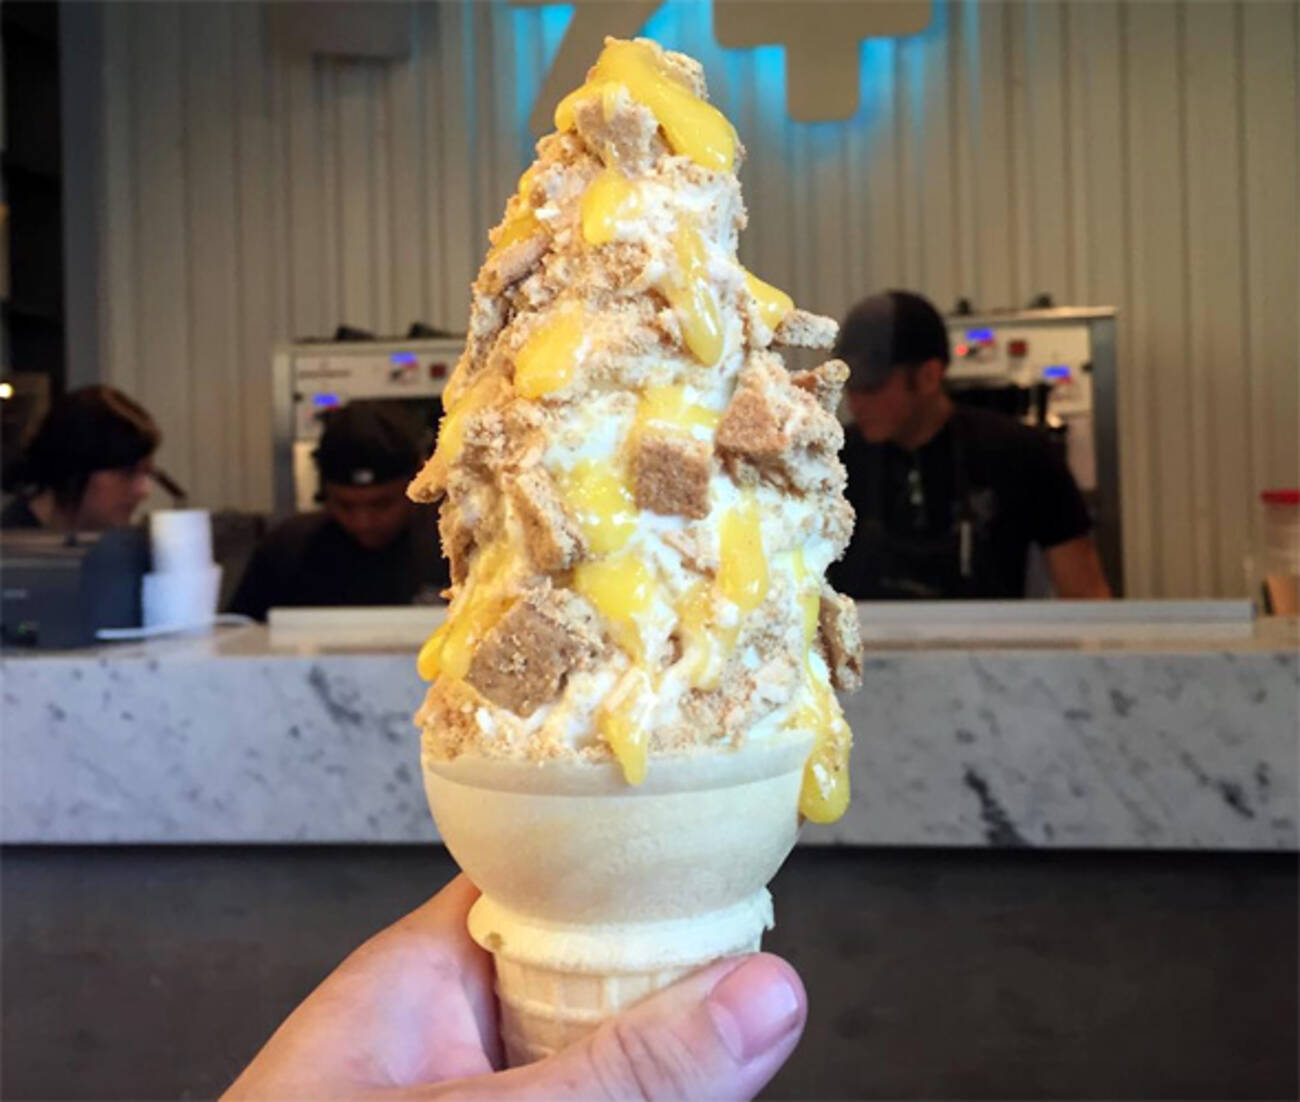 Epic new Toronto ice cream shop sets Instagram aglow